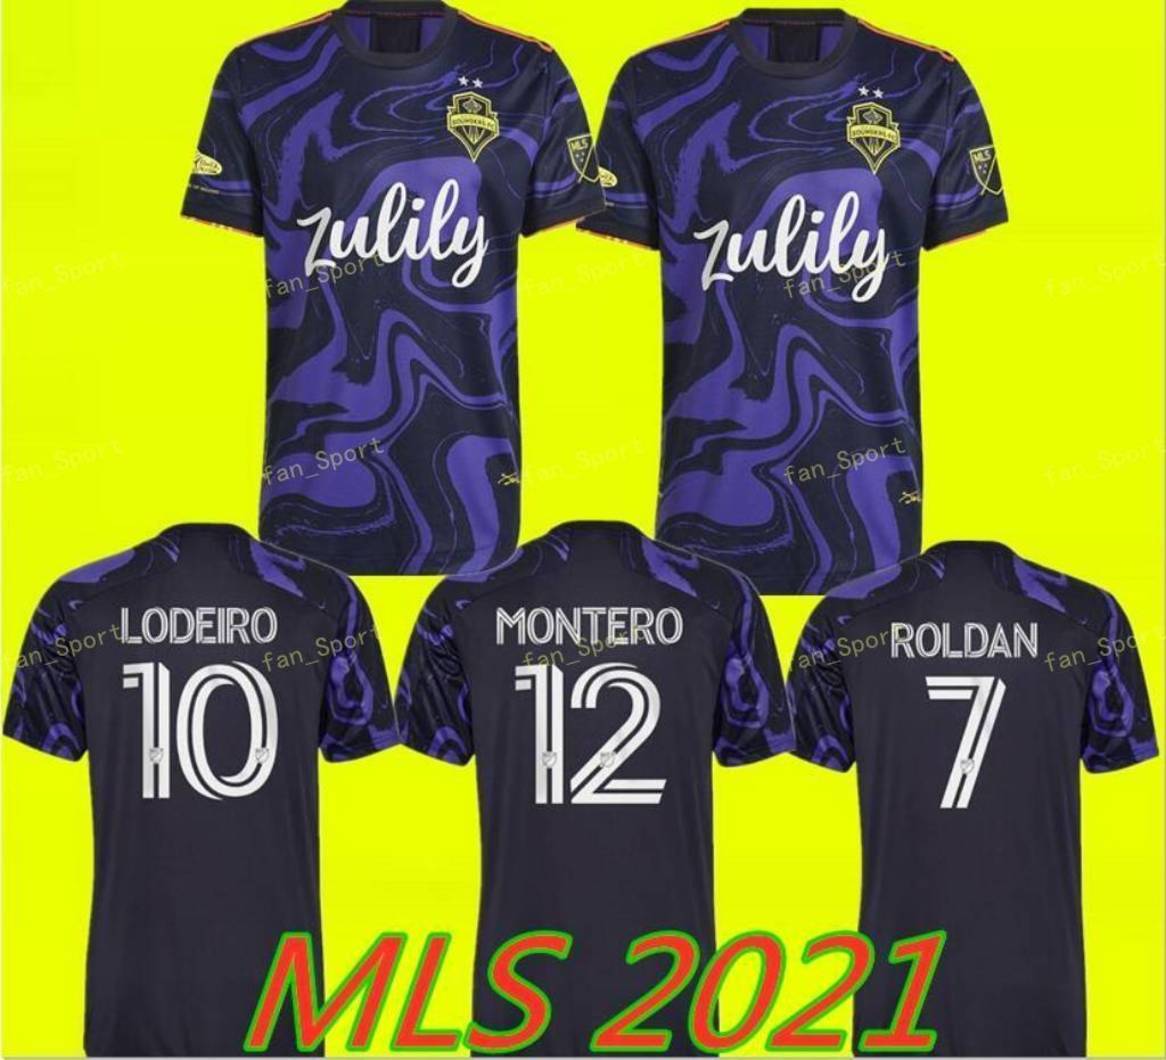 

MLS 2021 Seattle Sounders SOCCER JERSEYS away purple 21 22 Jimi Hendrix KIT Roldan Ruidíaz Lodeiro Montero MORRIS camisetas de fútbol football shirts MAILLOTS FOOT, Adult away